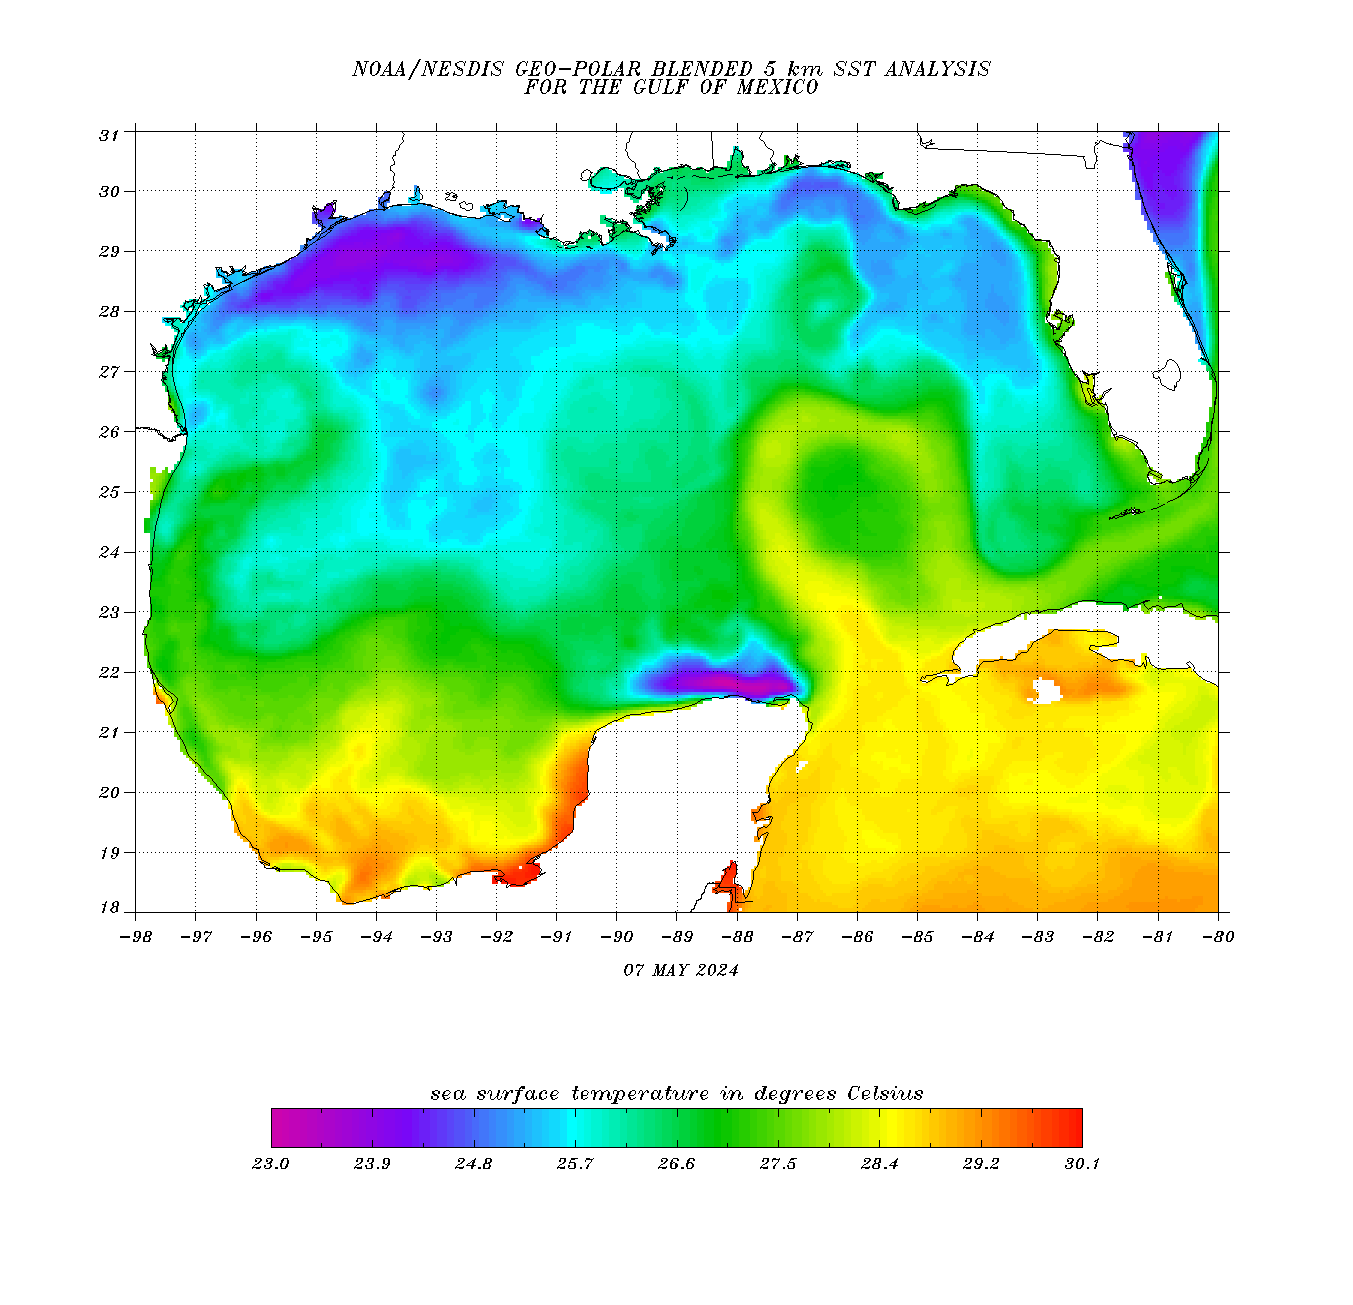 Gulf of Mexico Temperatures